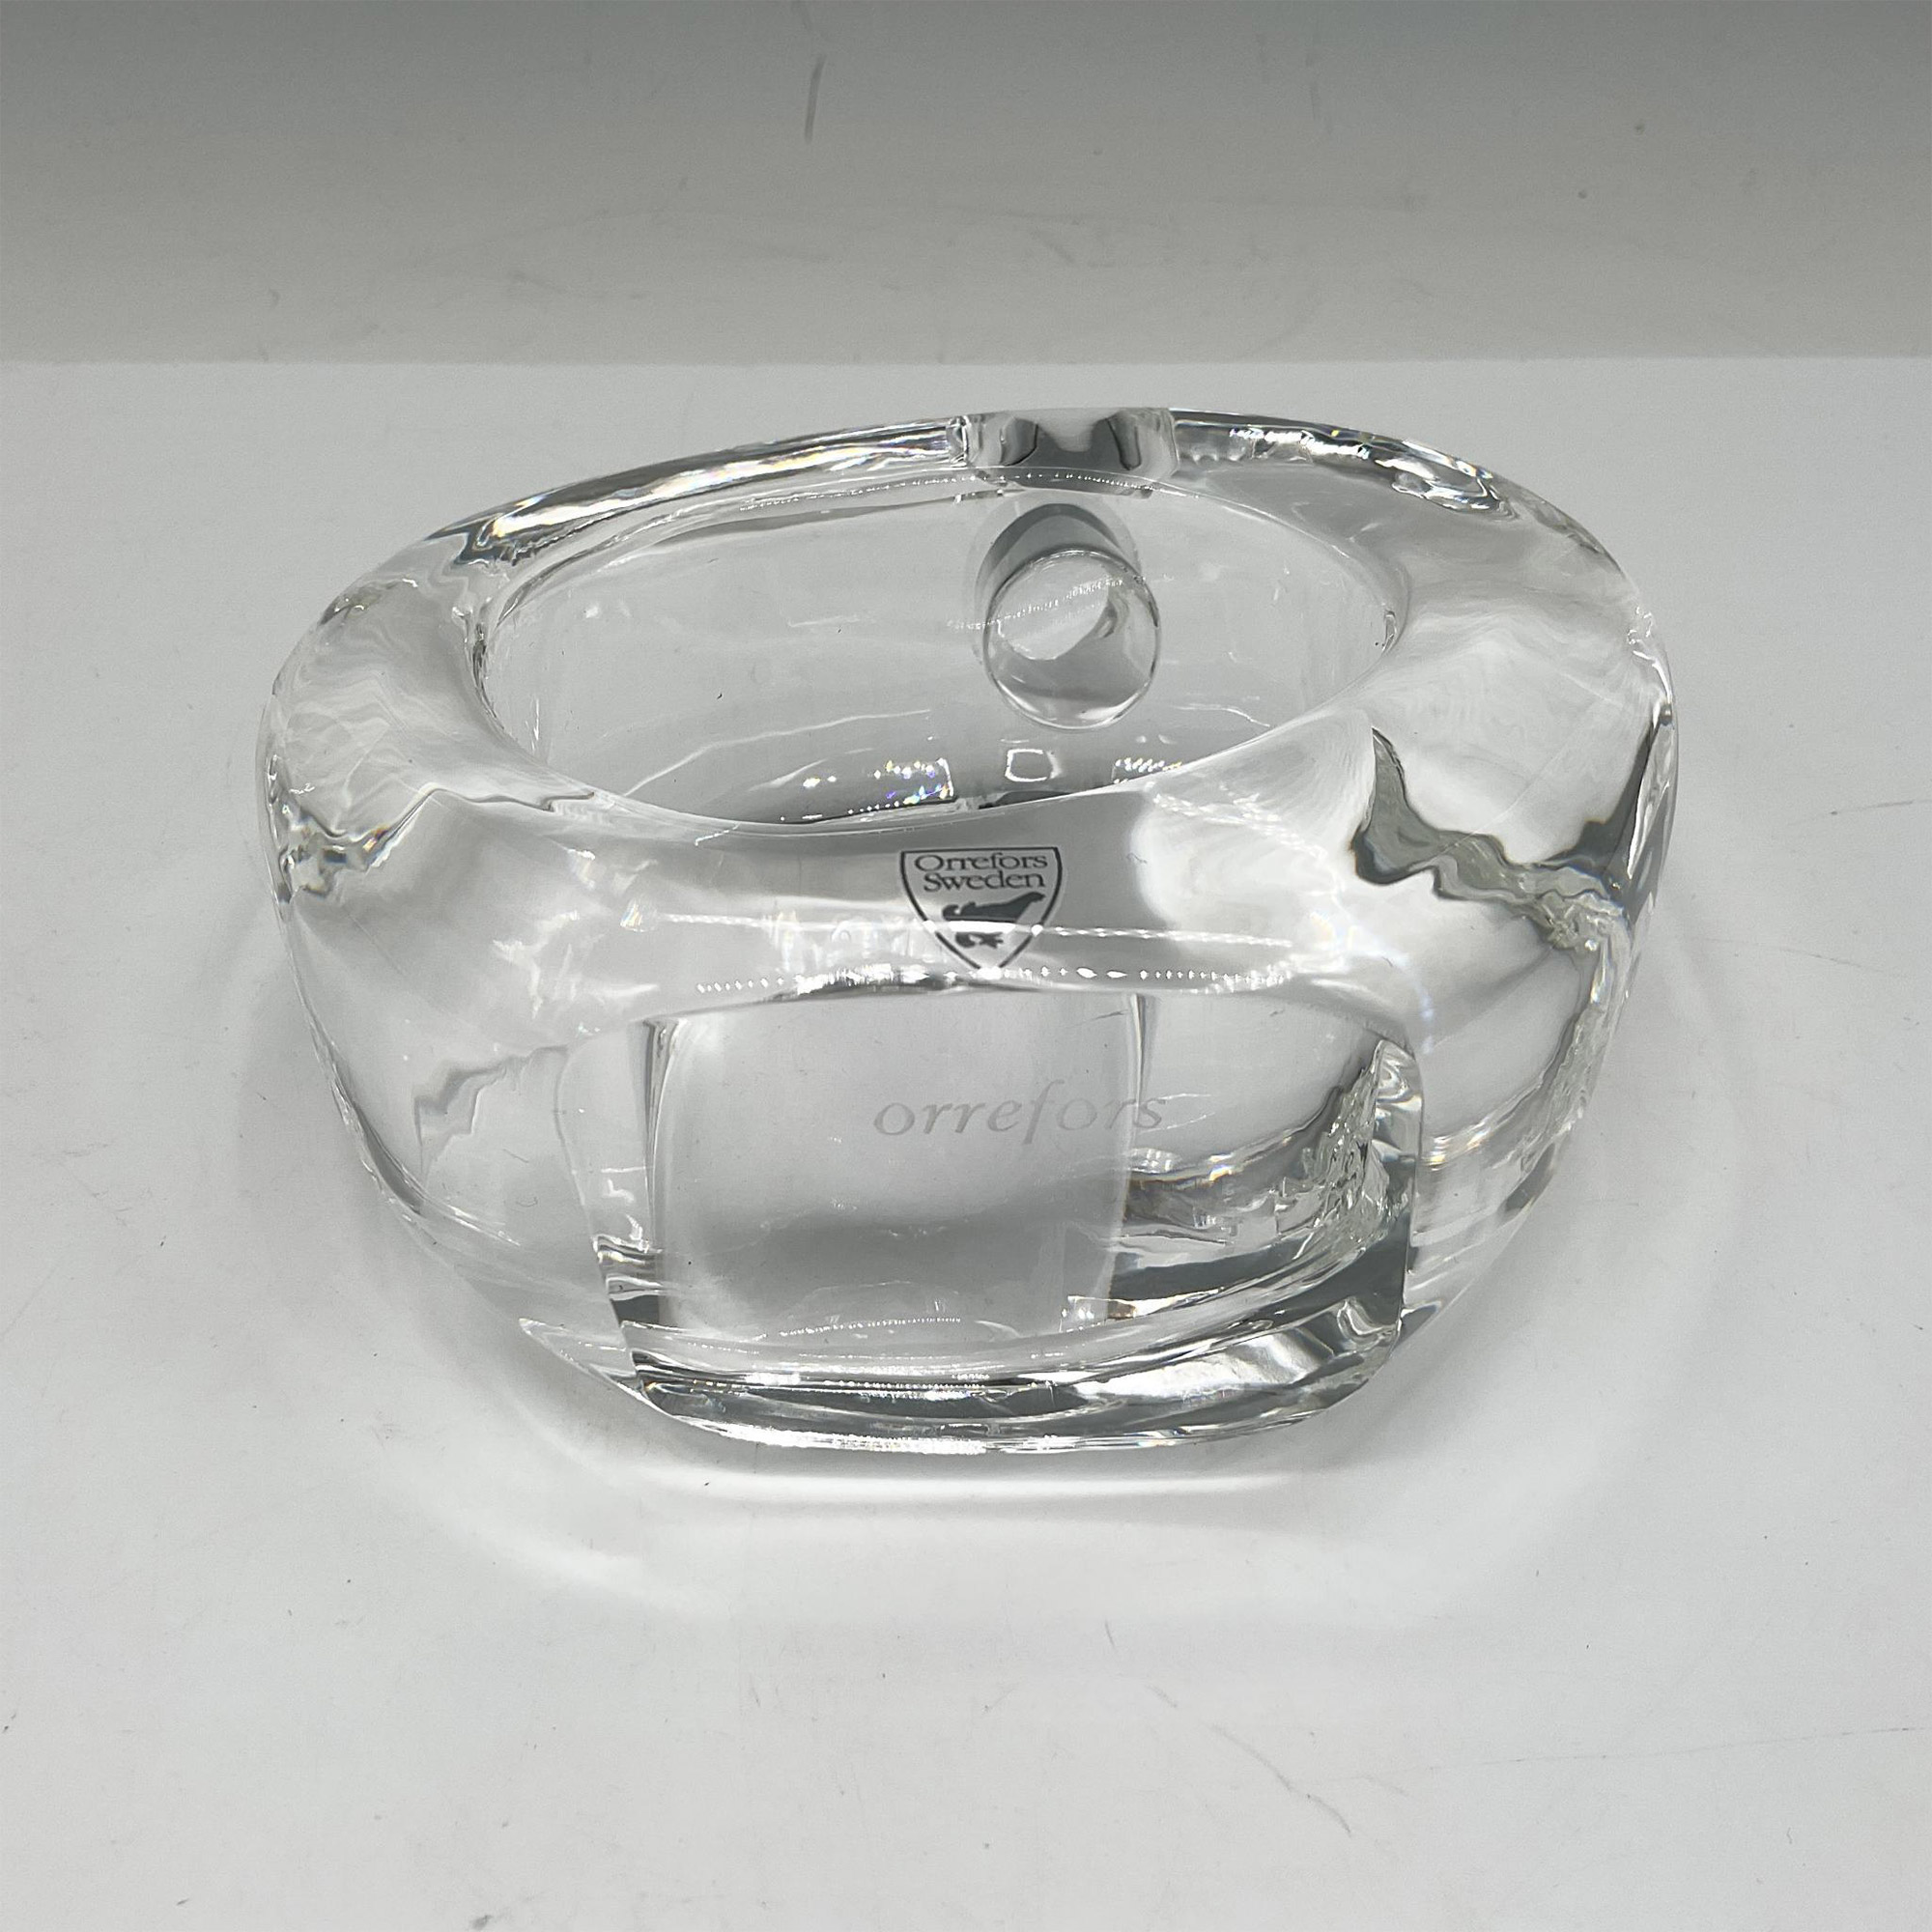 Orrefors Crystal Oval Candle Holder - Image 4 of 5